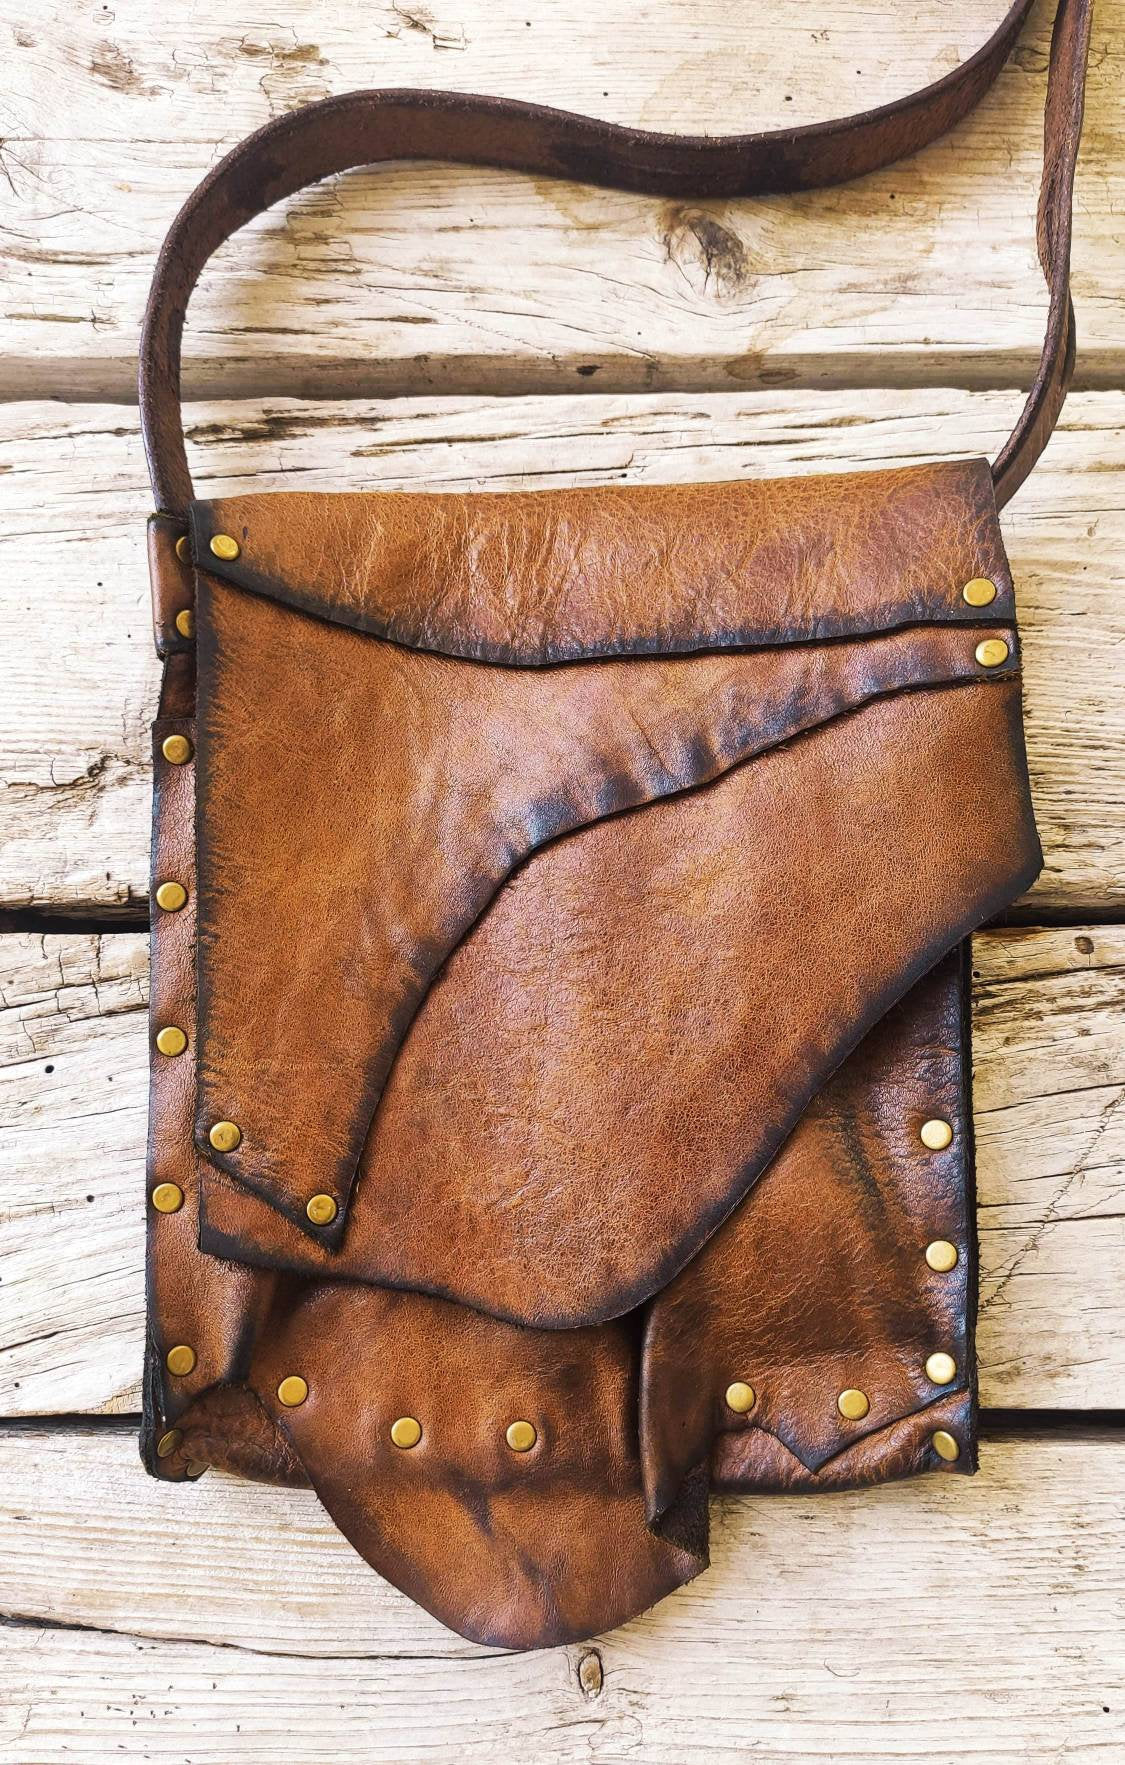 Vintage Leather Bags for Women - Handbags, Saddle, Shoulder Bags